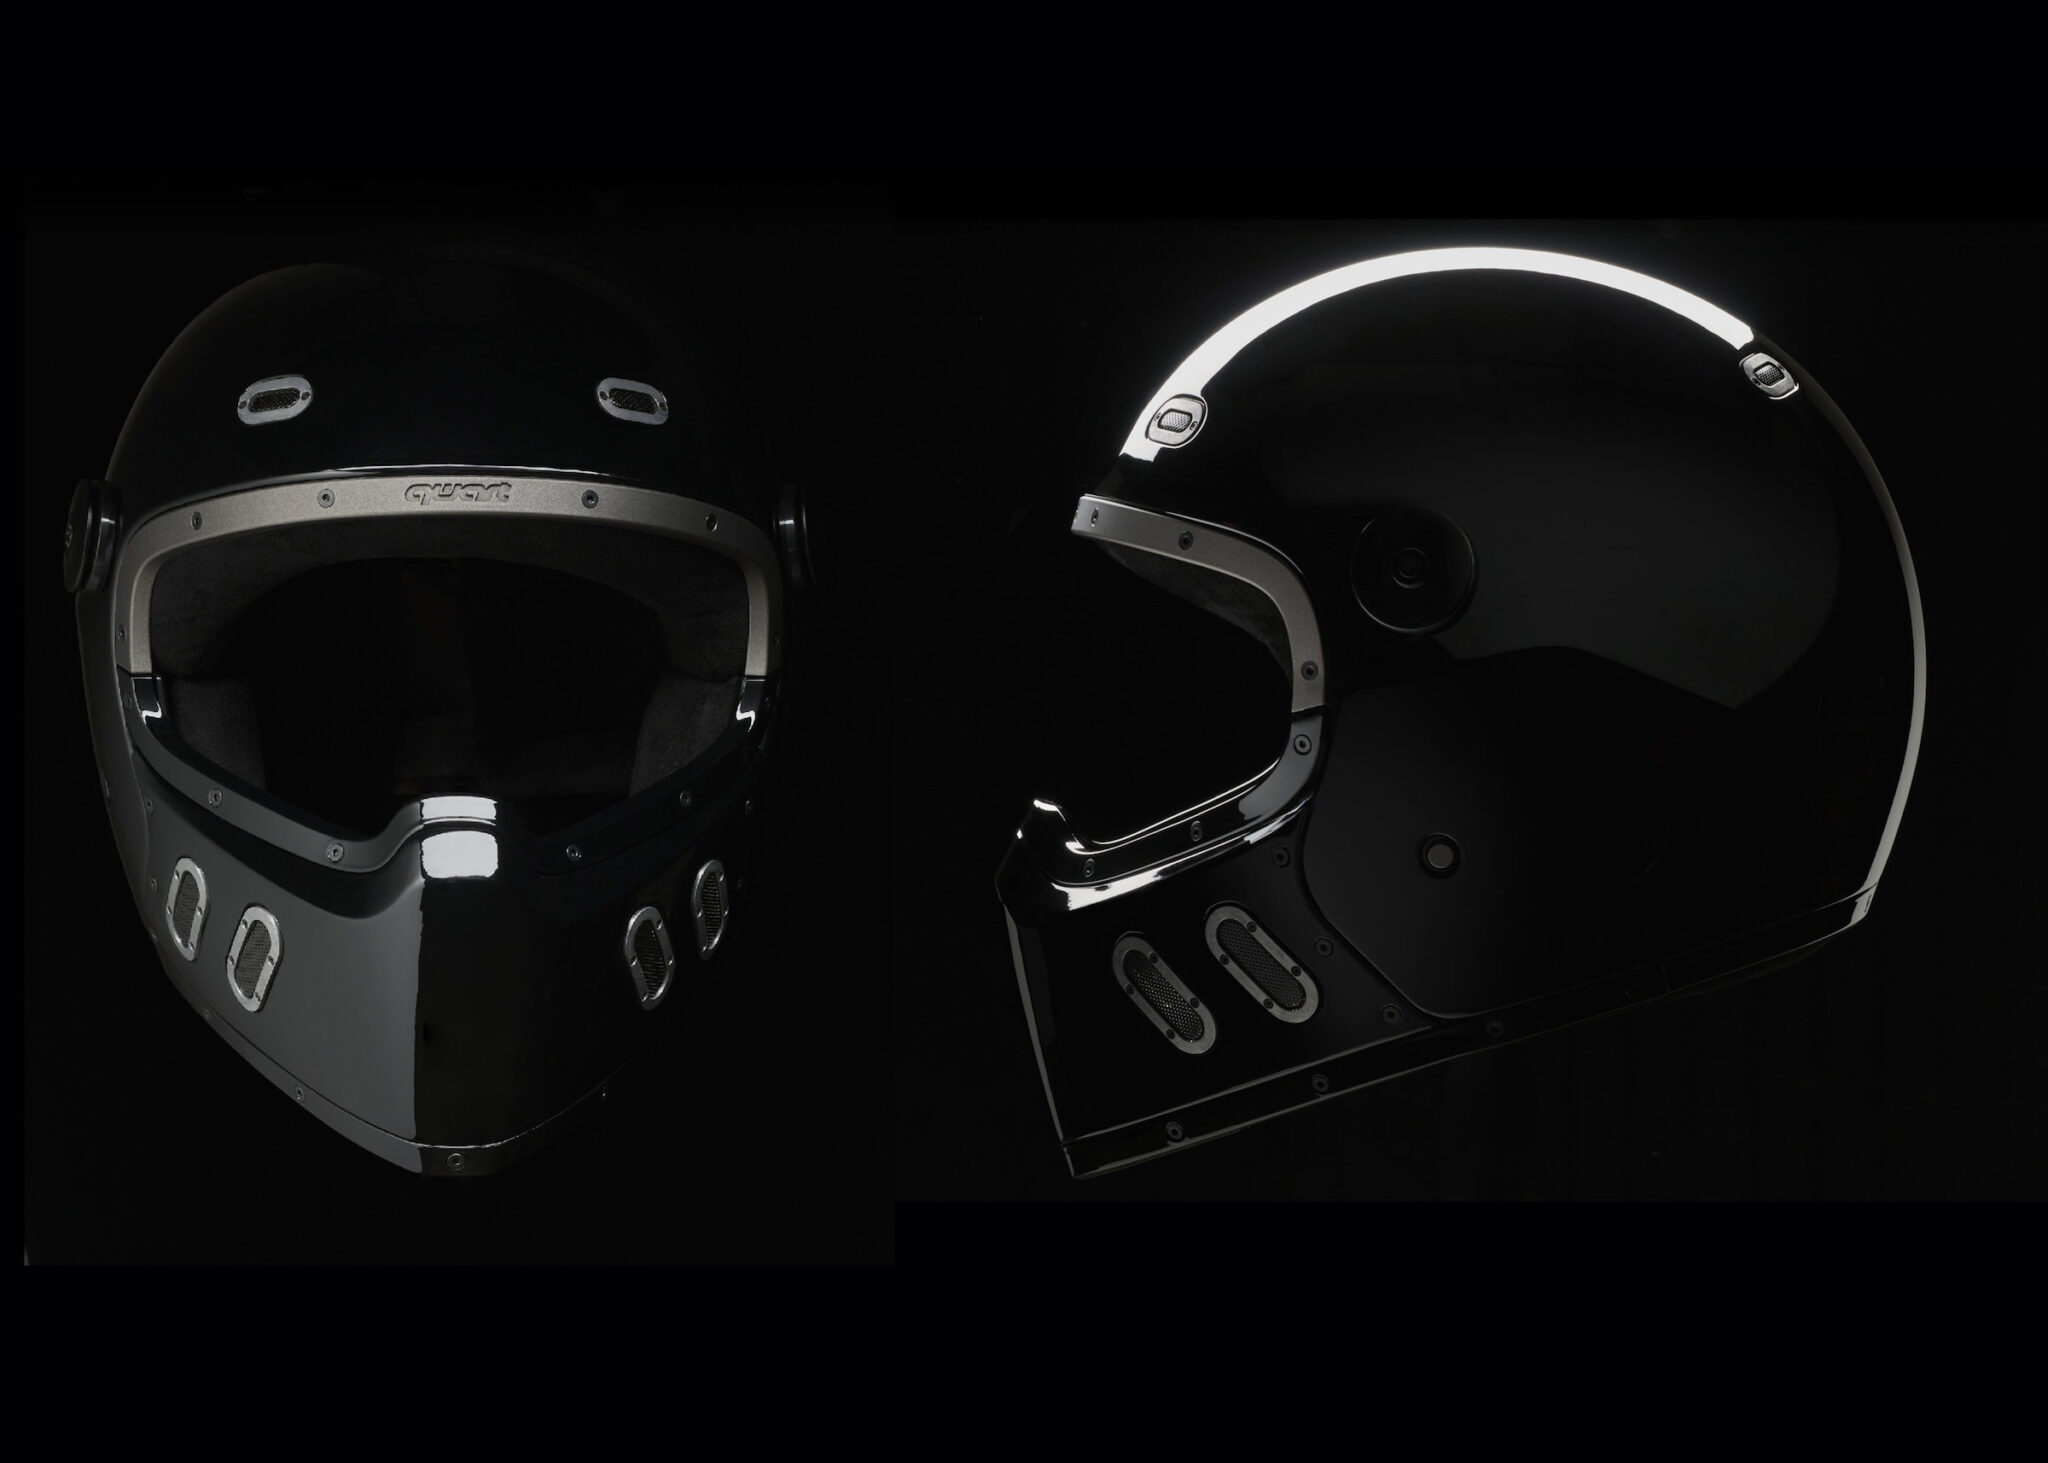 Qwart Helmets - The Phoenix: A Modular Carbon Fiber Motorcycle Helmet